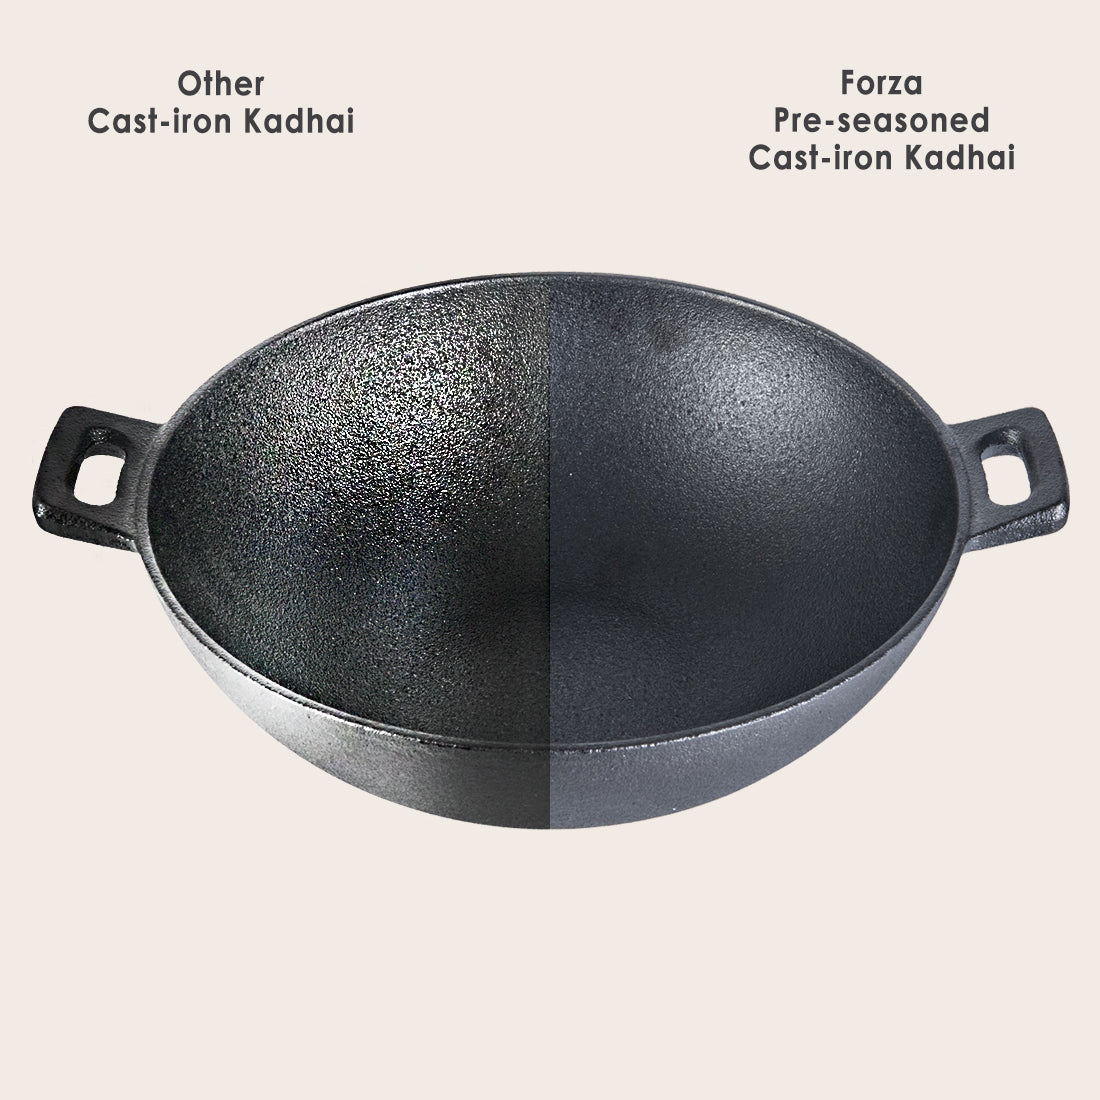 Forza 30cm Cast-iron Kadhai, Pre-Seasoned Cookware, Induction Friendly, 3.35L, 3.8mm